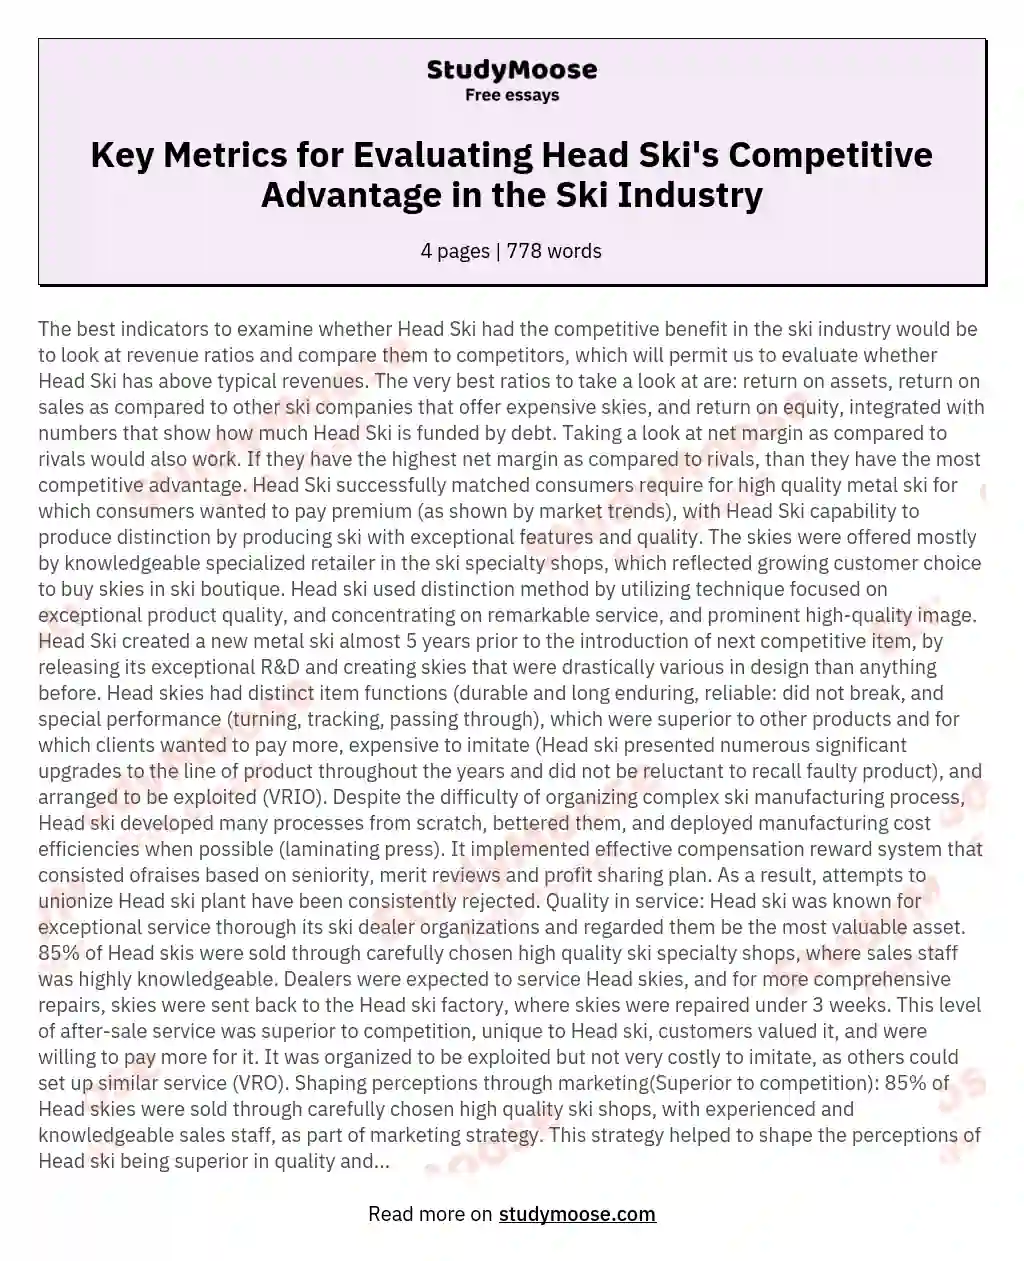 Key Metrics for Evaluating Head Ski's Competitive Advantage in the Ski Industry essay